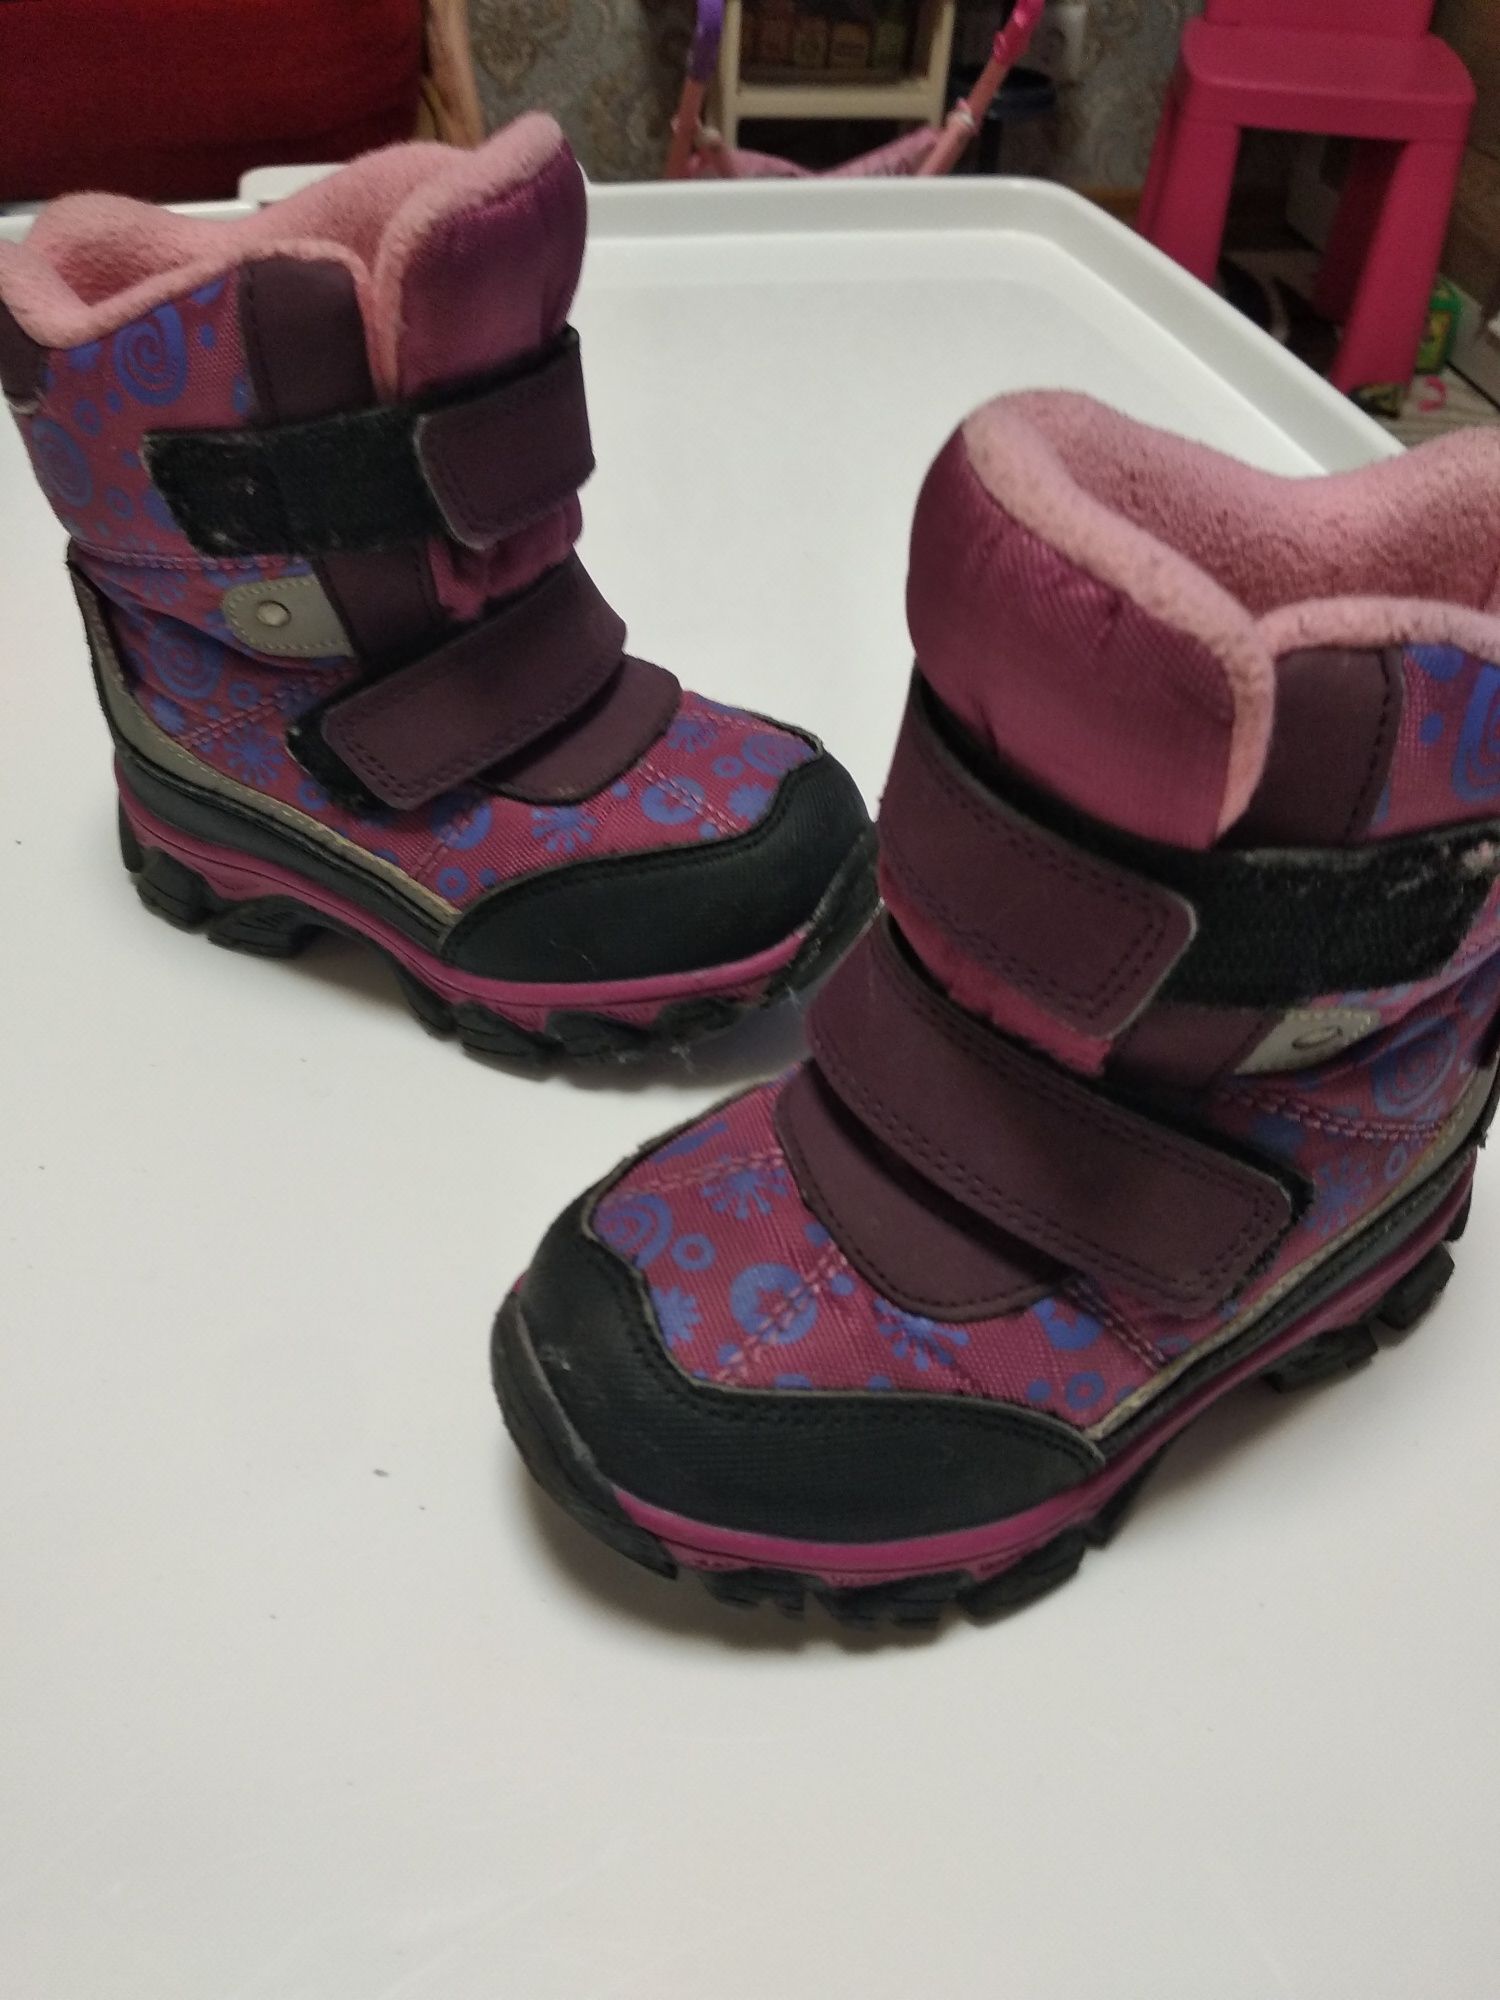 Зимние детские термо-ботиночки на овчине TOM.M